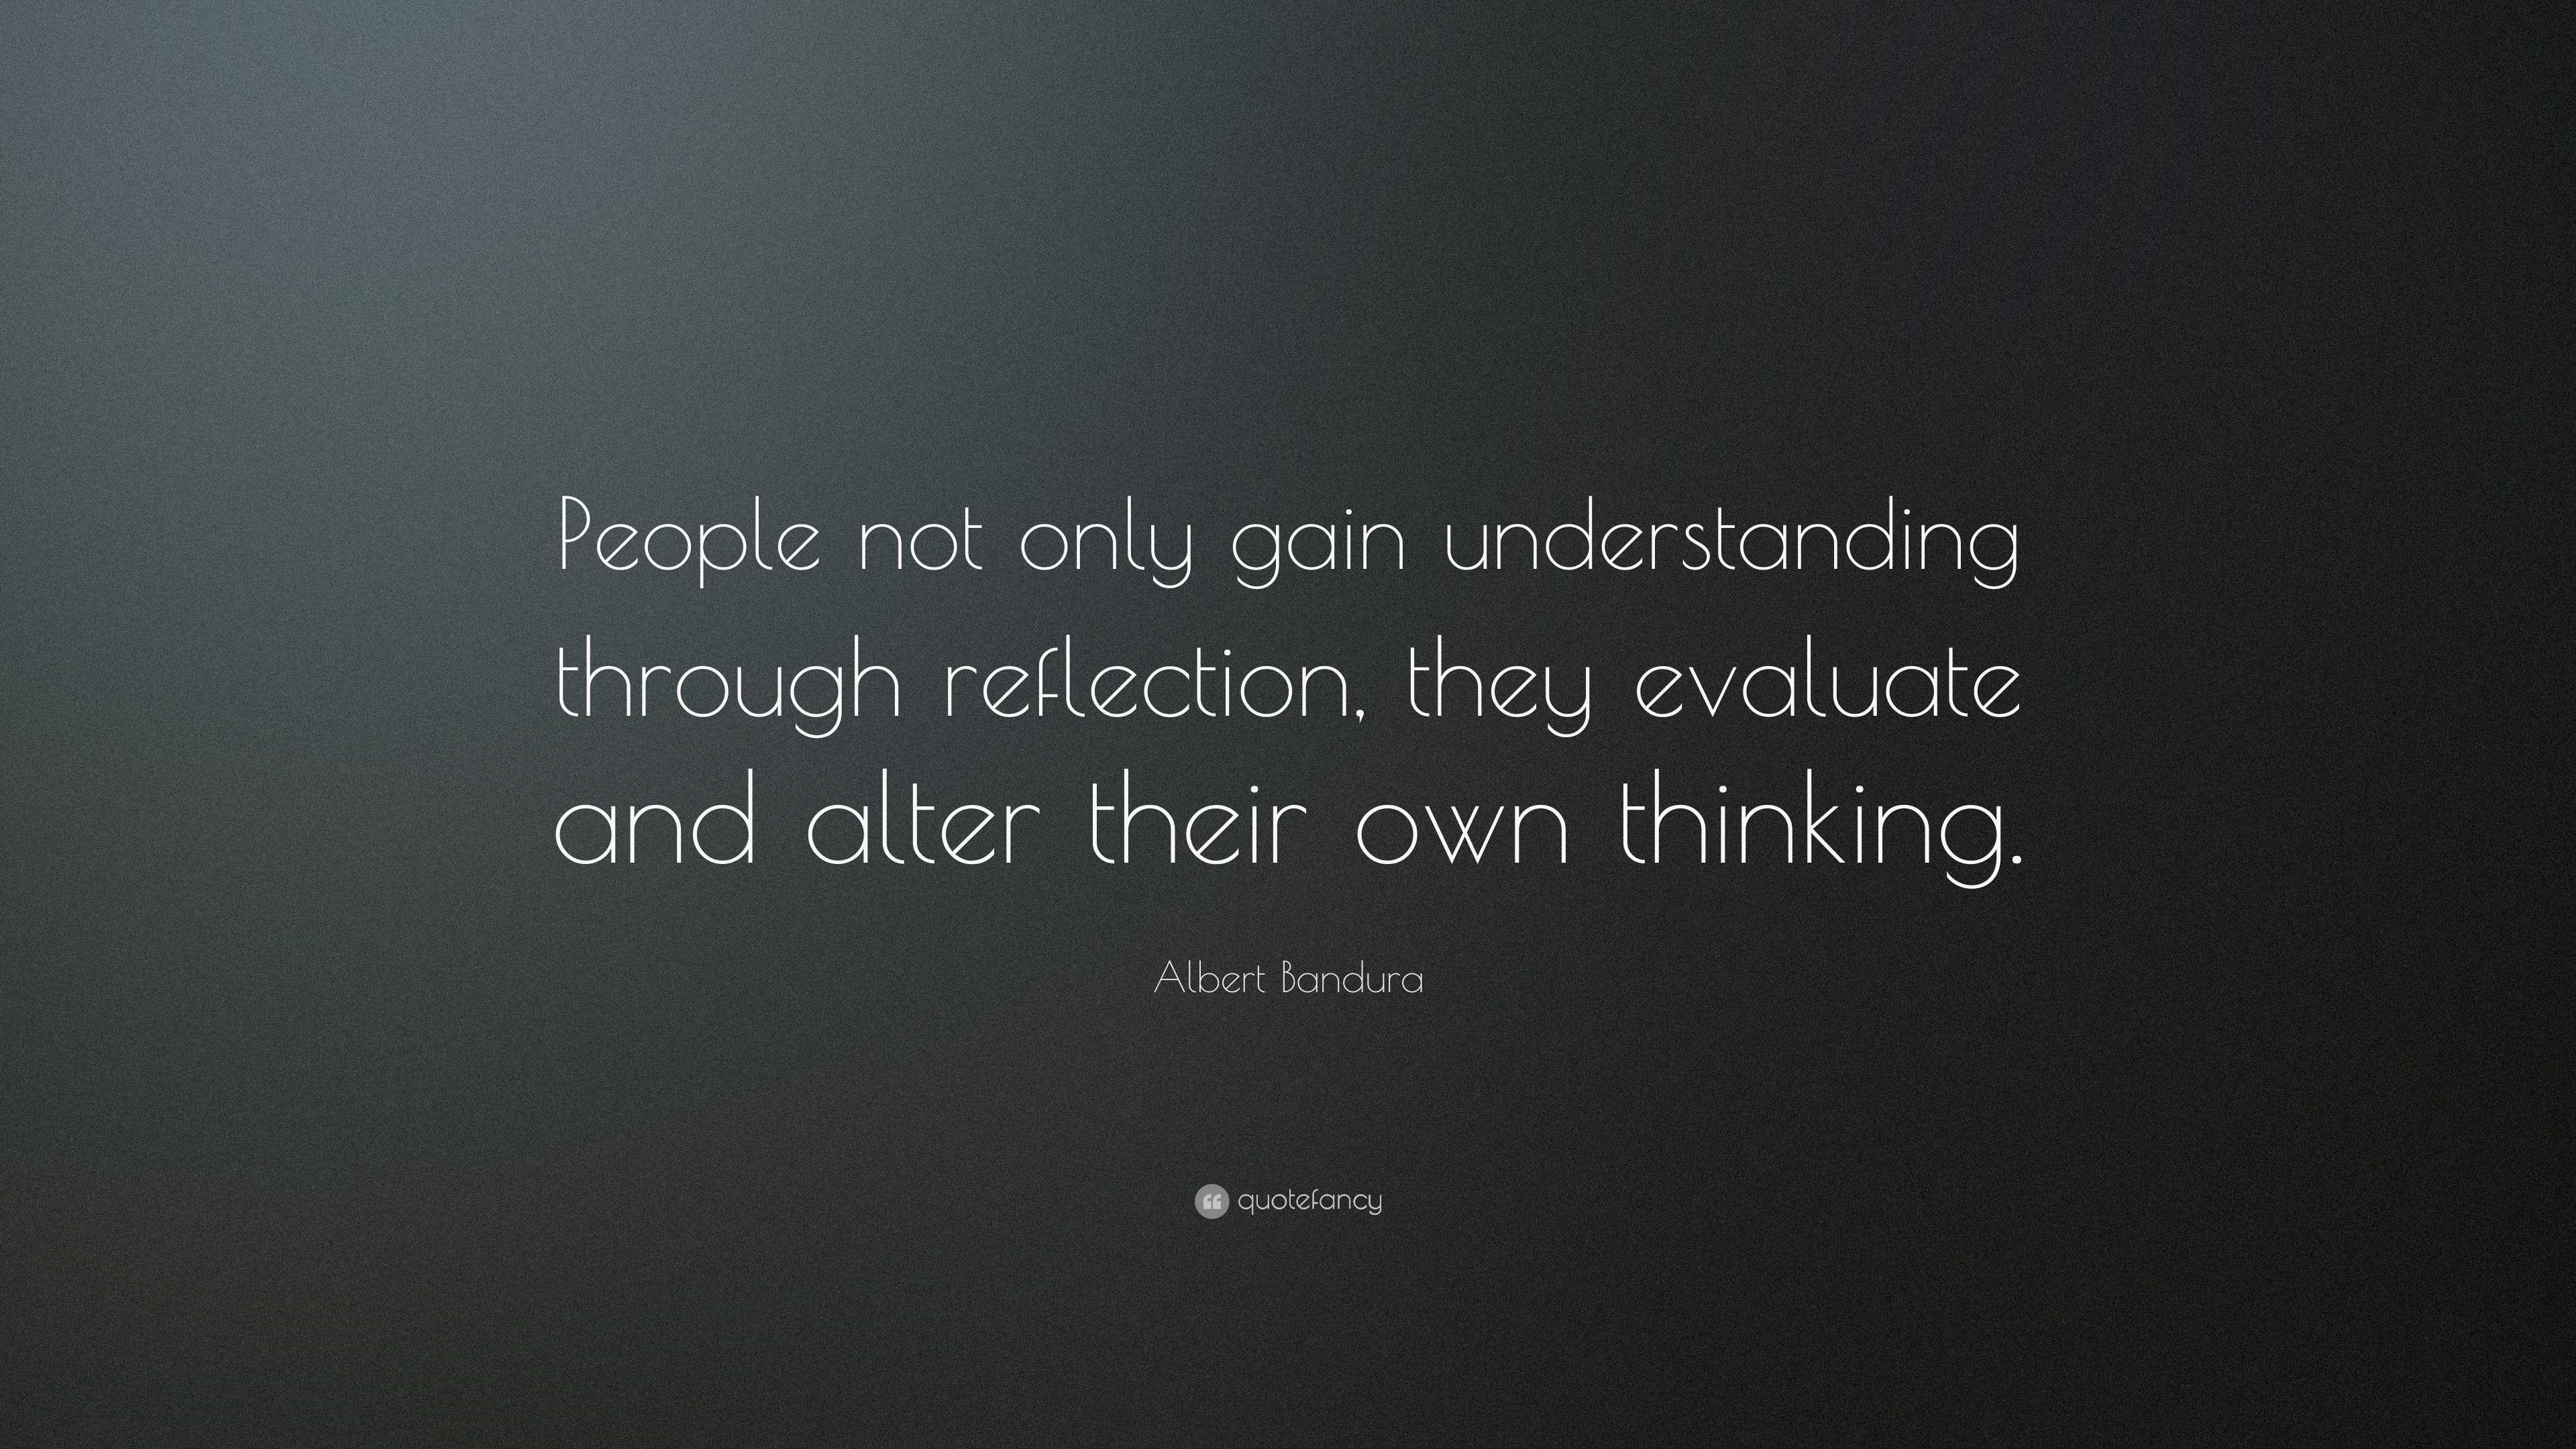 Albert Bandura Quote: “People not only gain understanding through ...